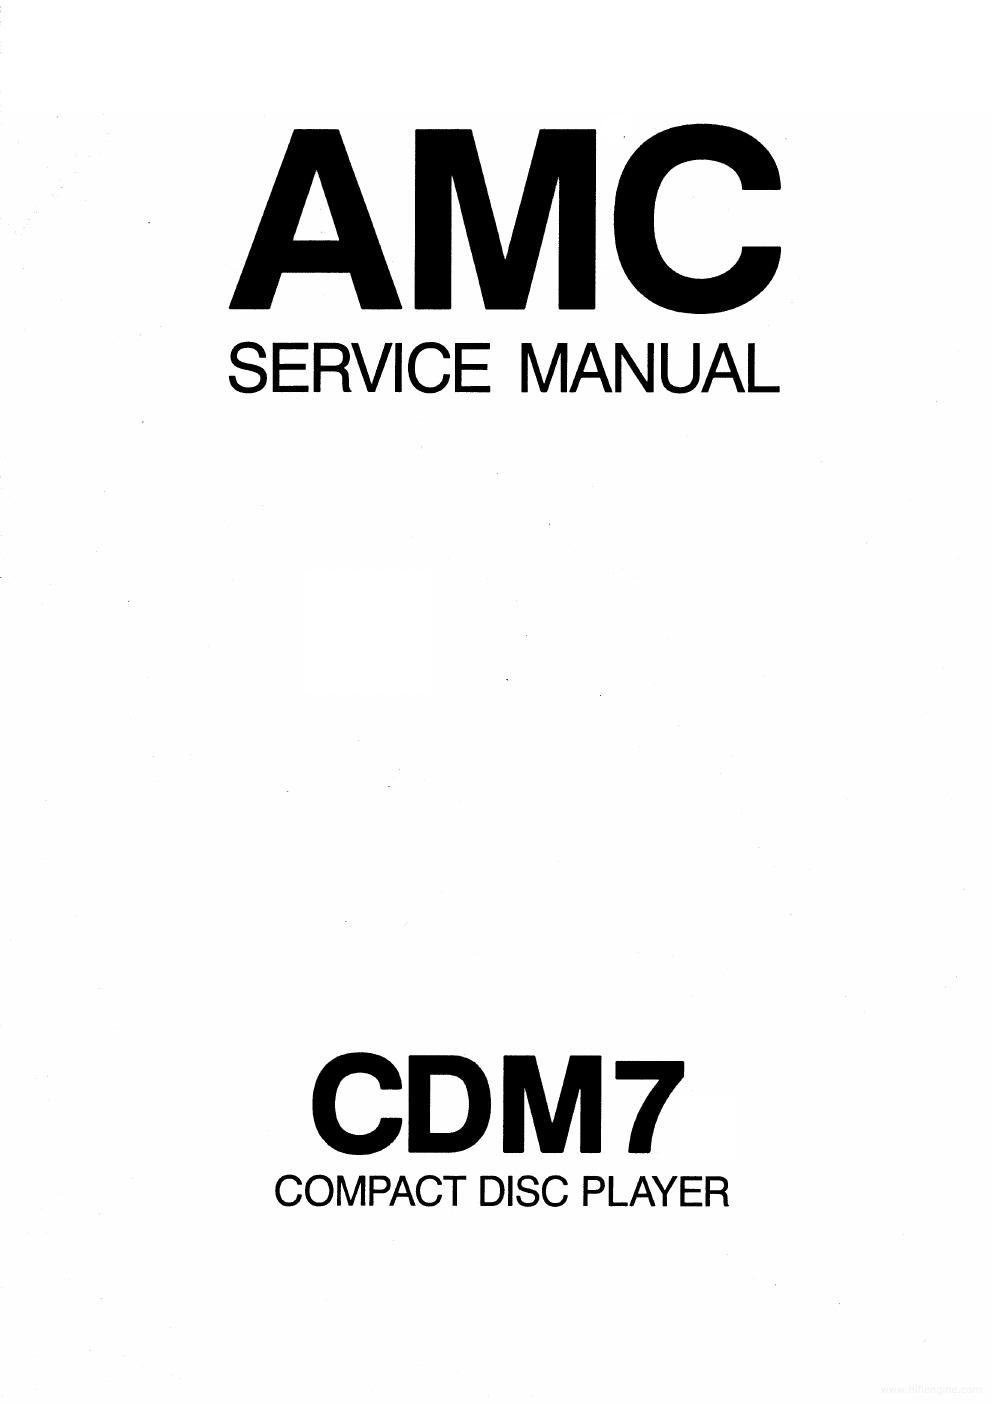 Amc cdm 7 cd service manual